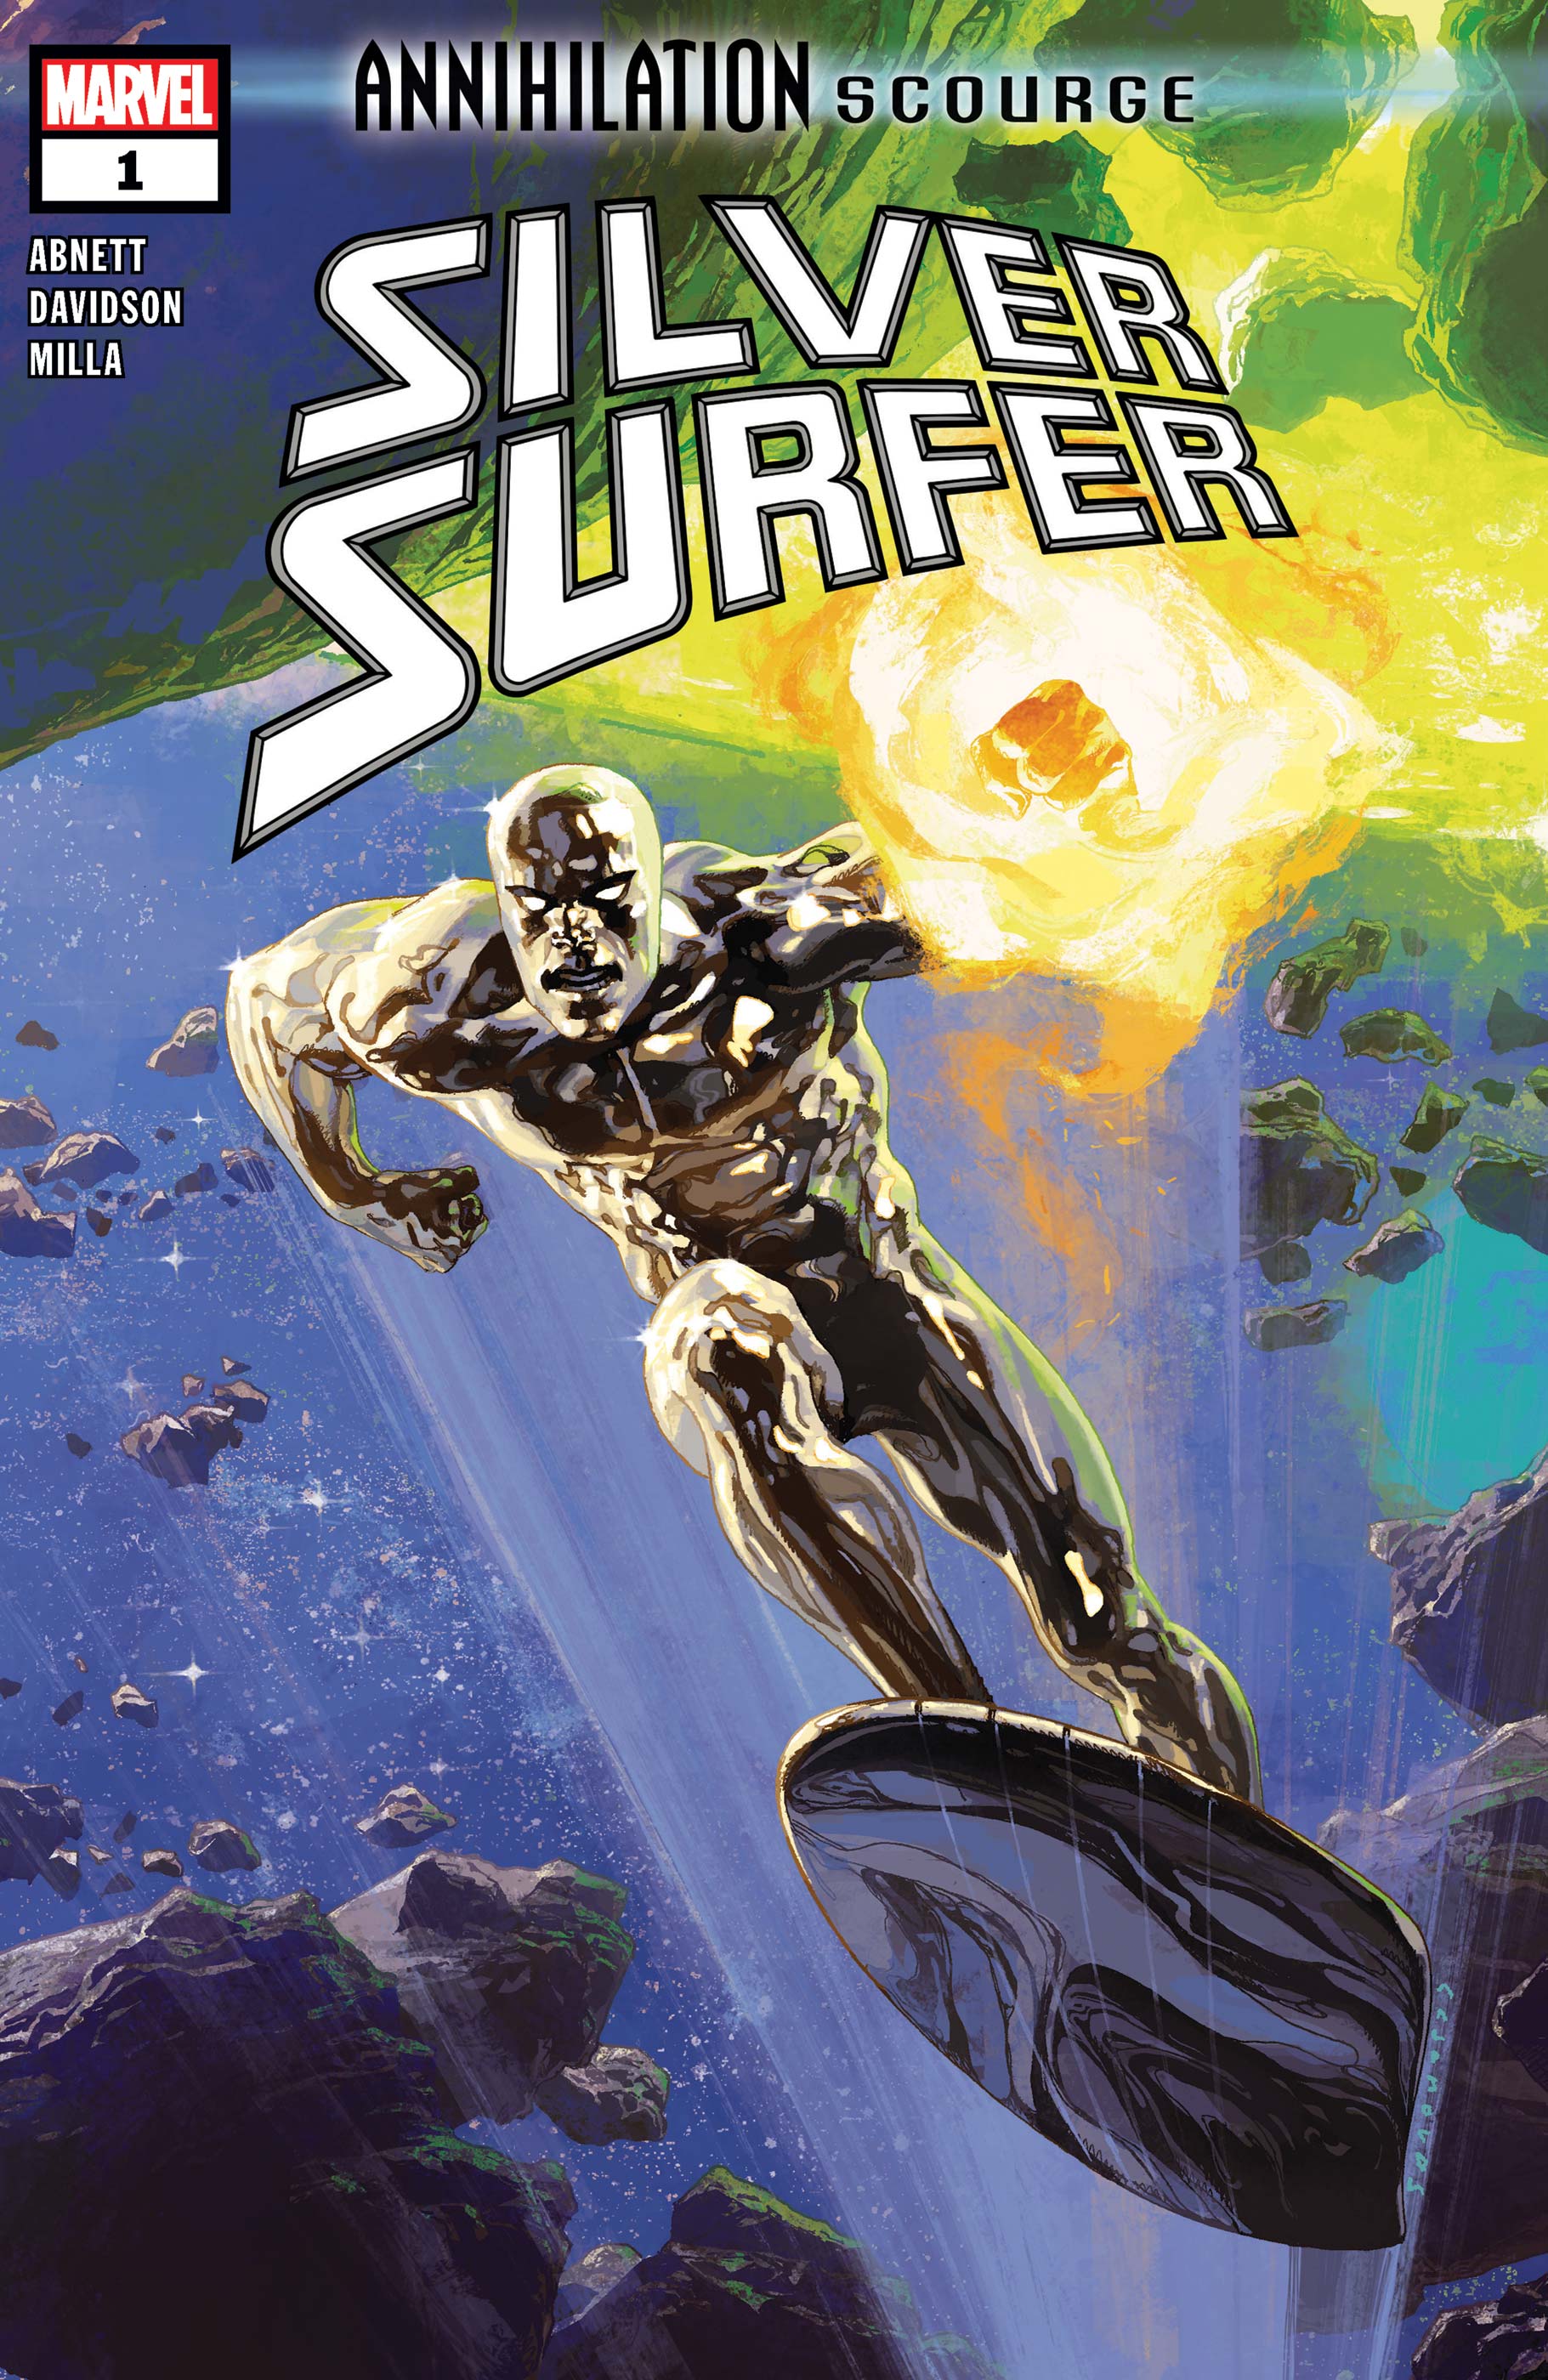 Annihilation Scourge Silver Surfer #1 Main Cover Marvel Comics